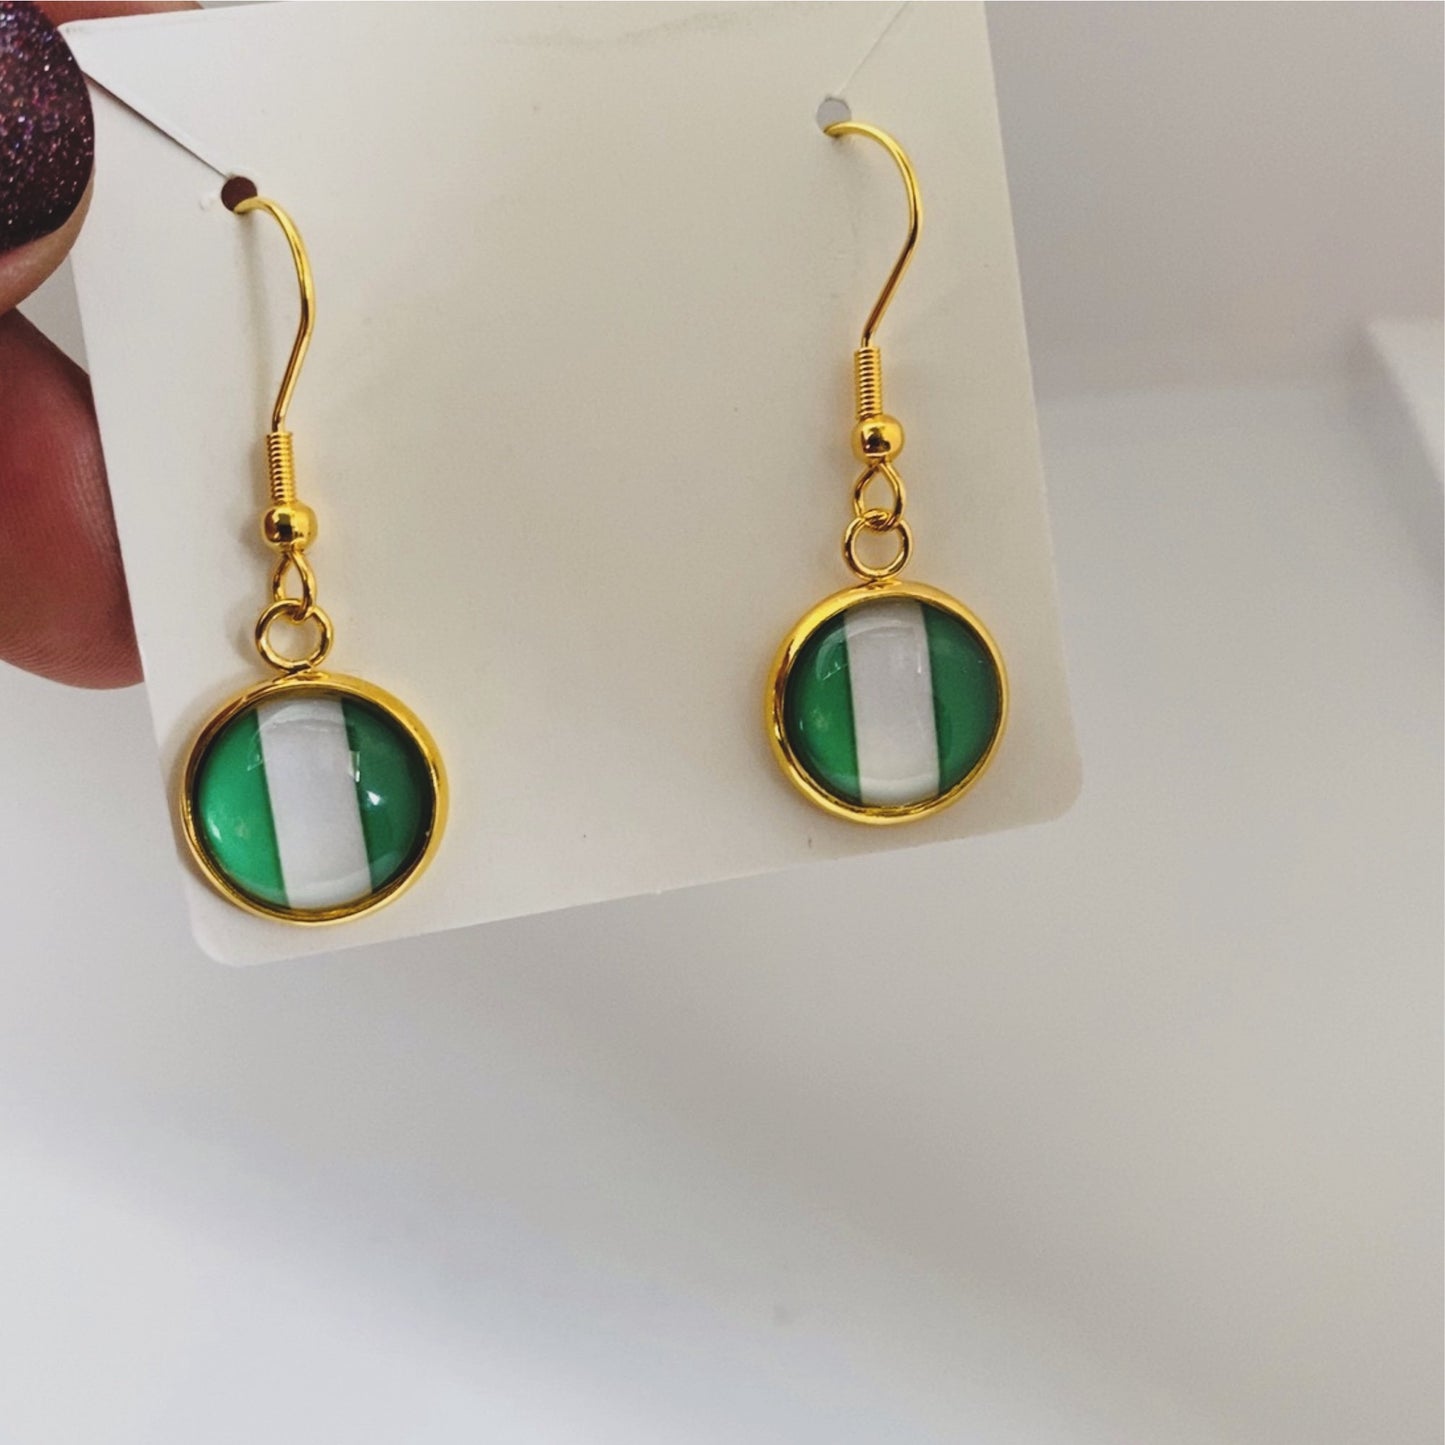 Nigerian Flag Earrings Handmade Earrings